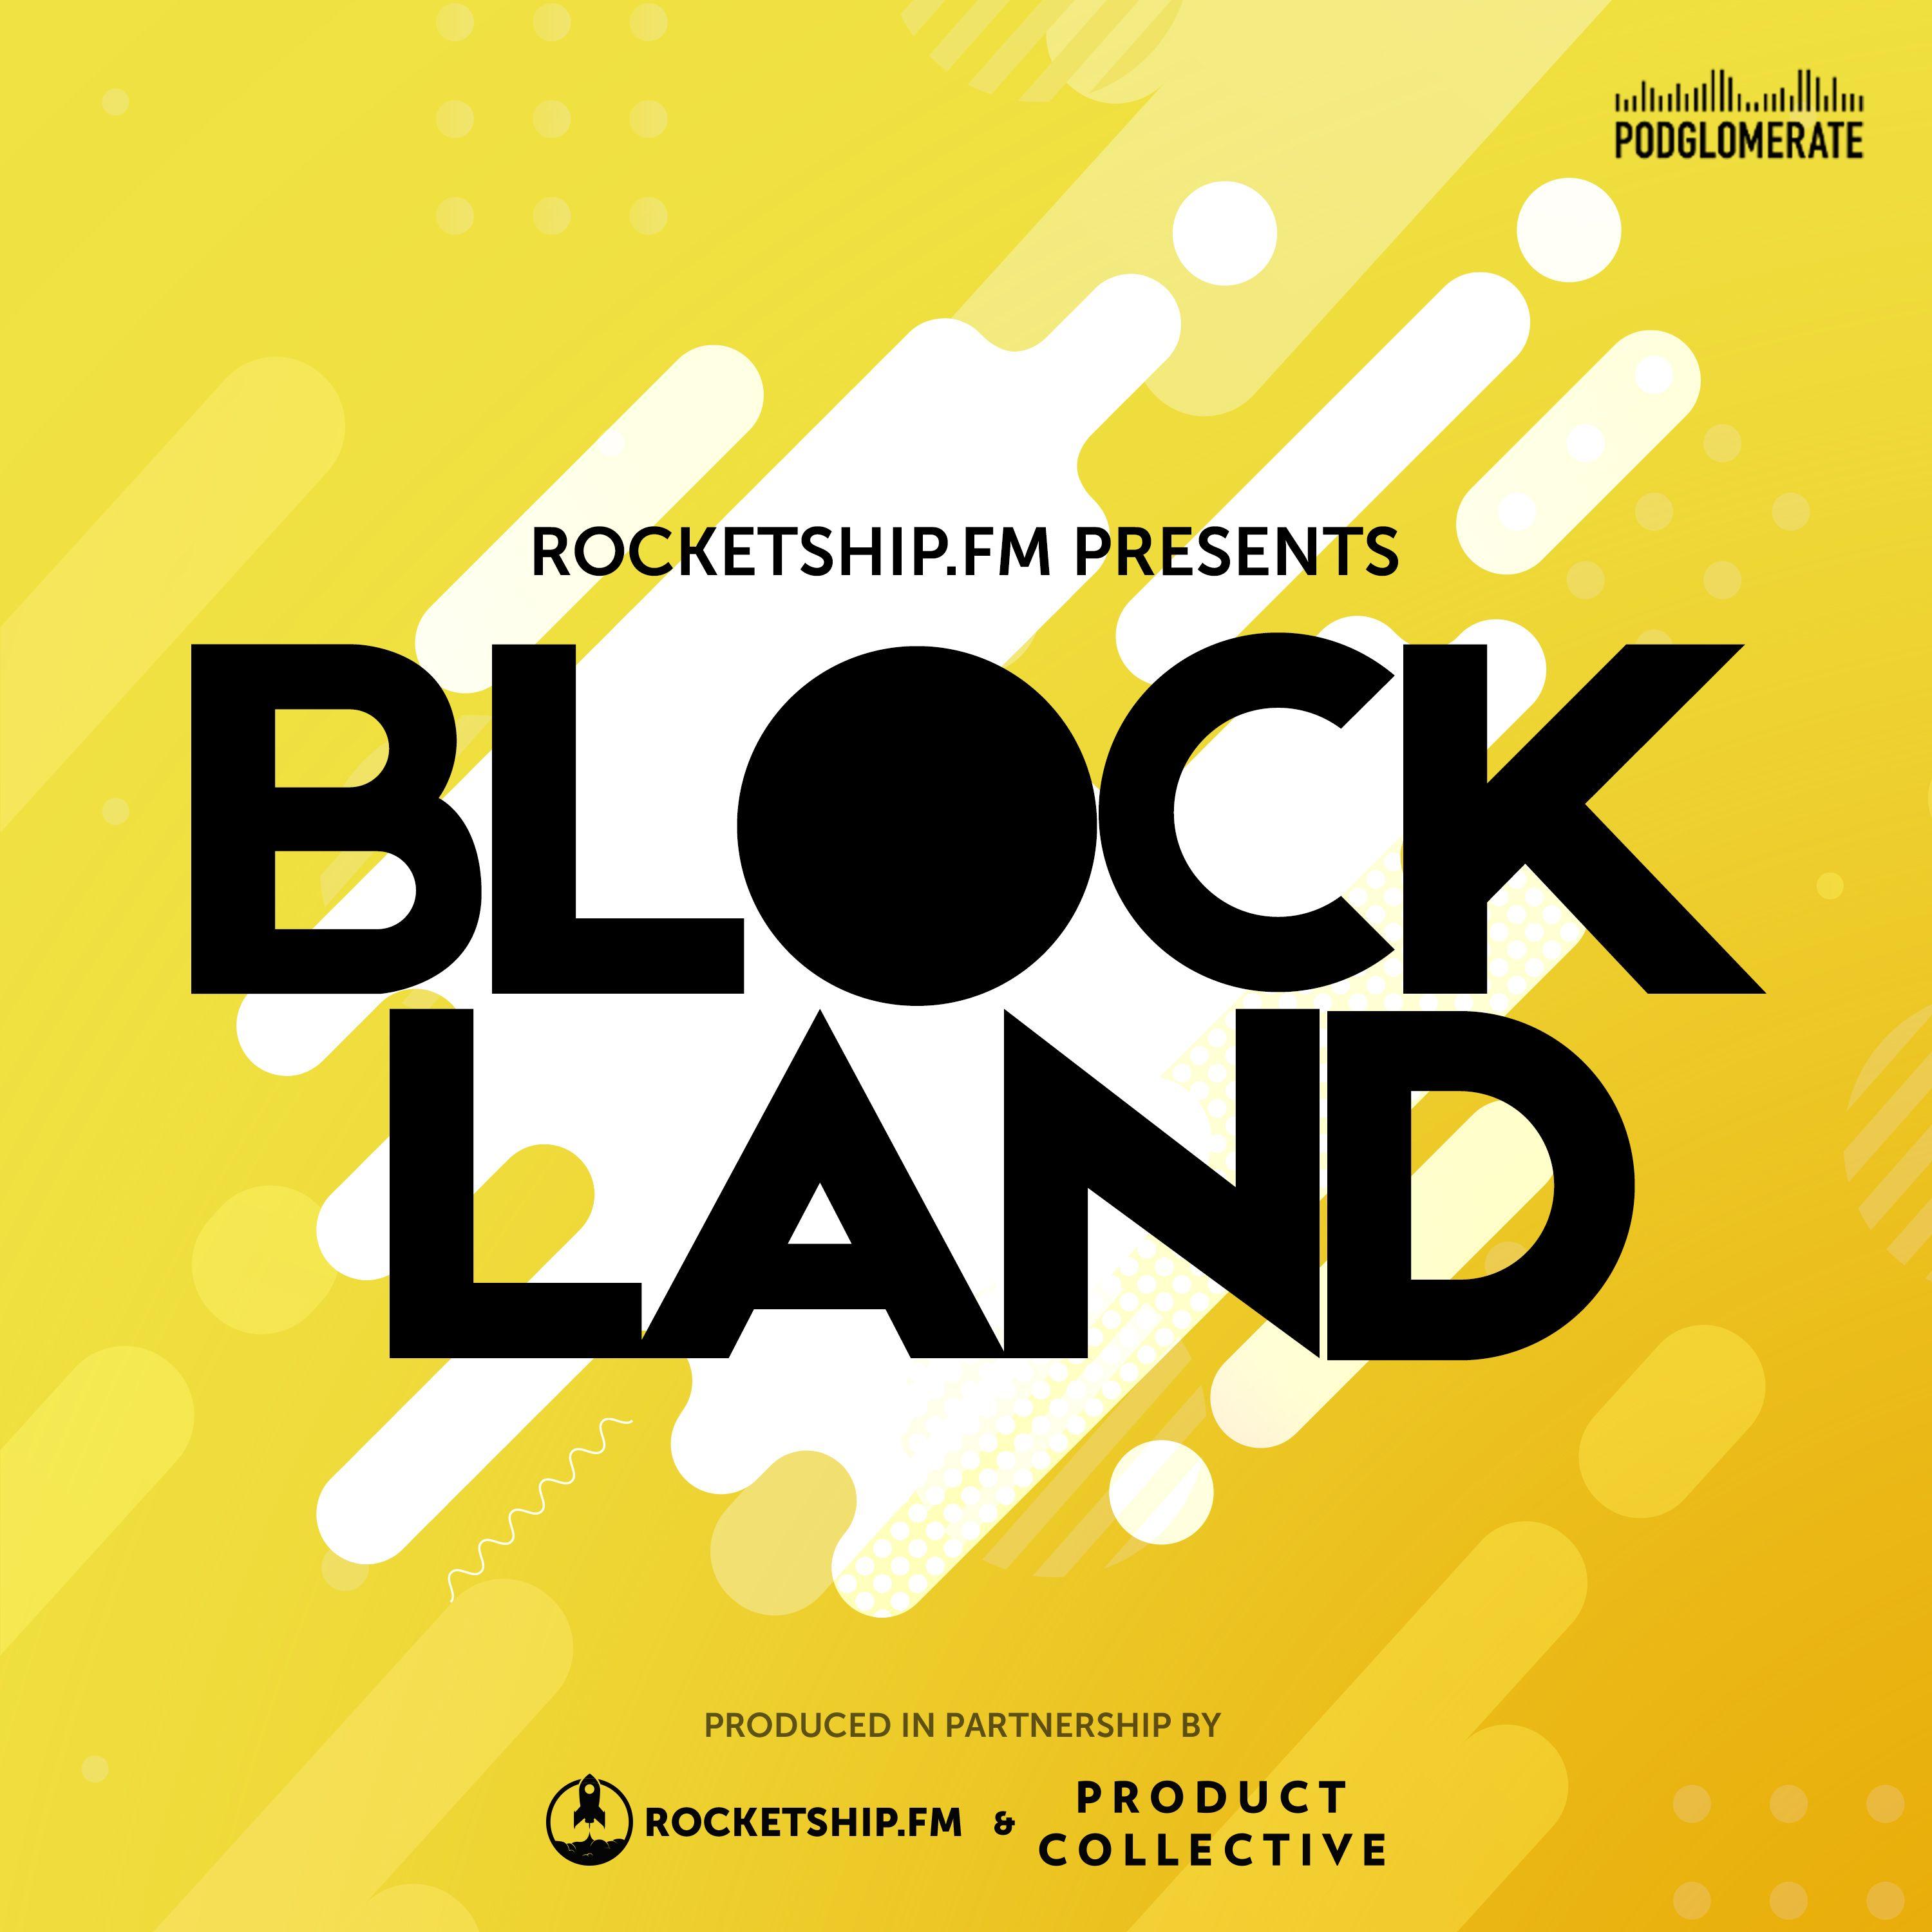 Blockland Logo - Rocketship.fm - Business Explored.